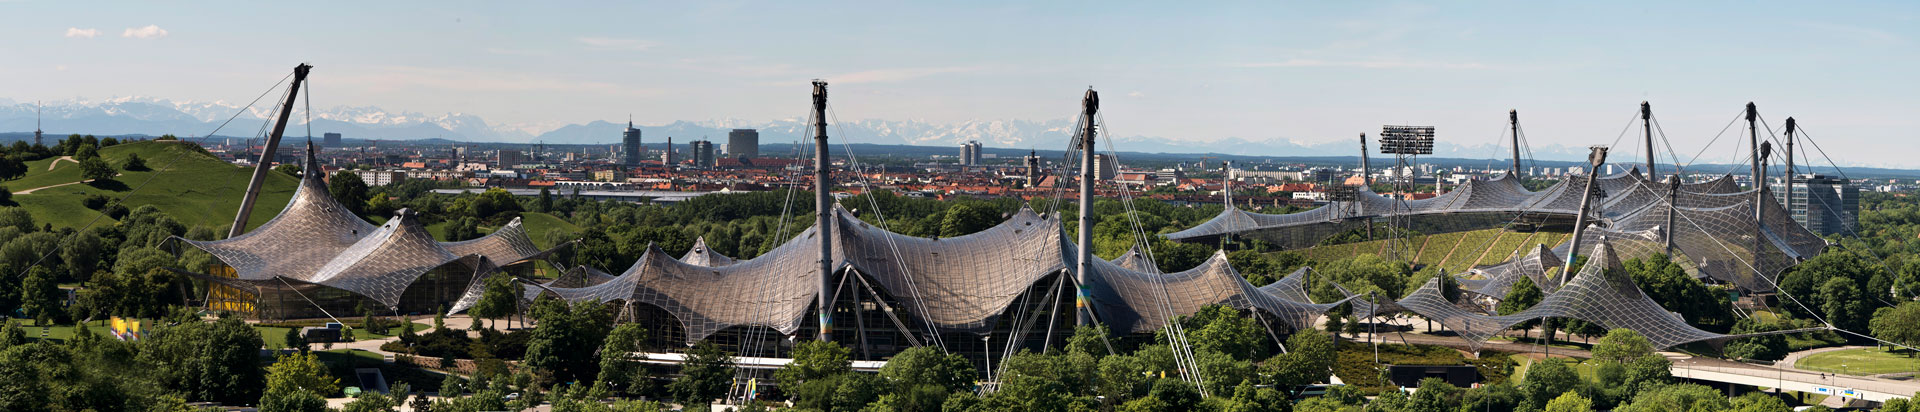 Olympiapark München | Bildquelle: Olympiapark München